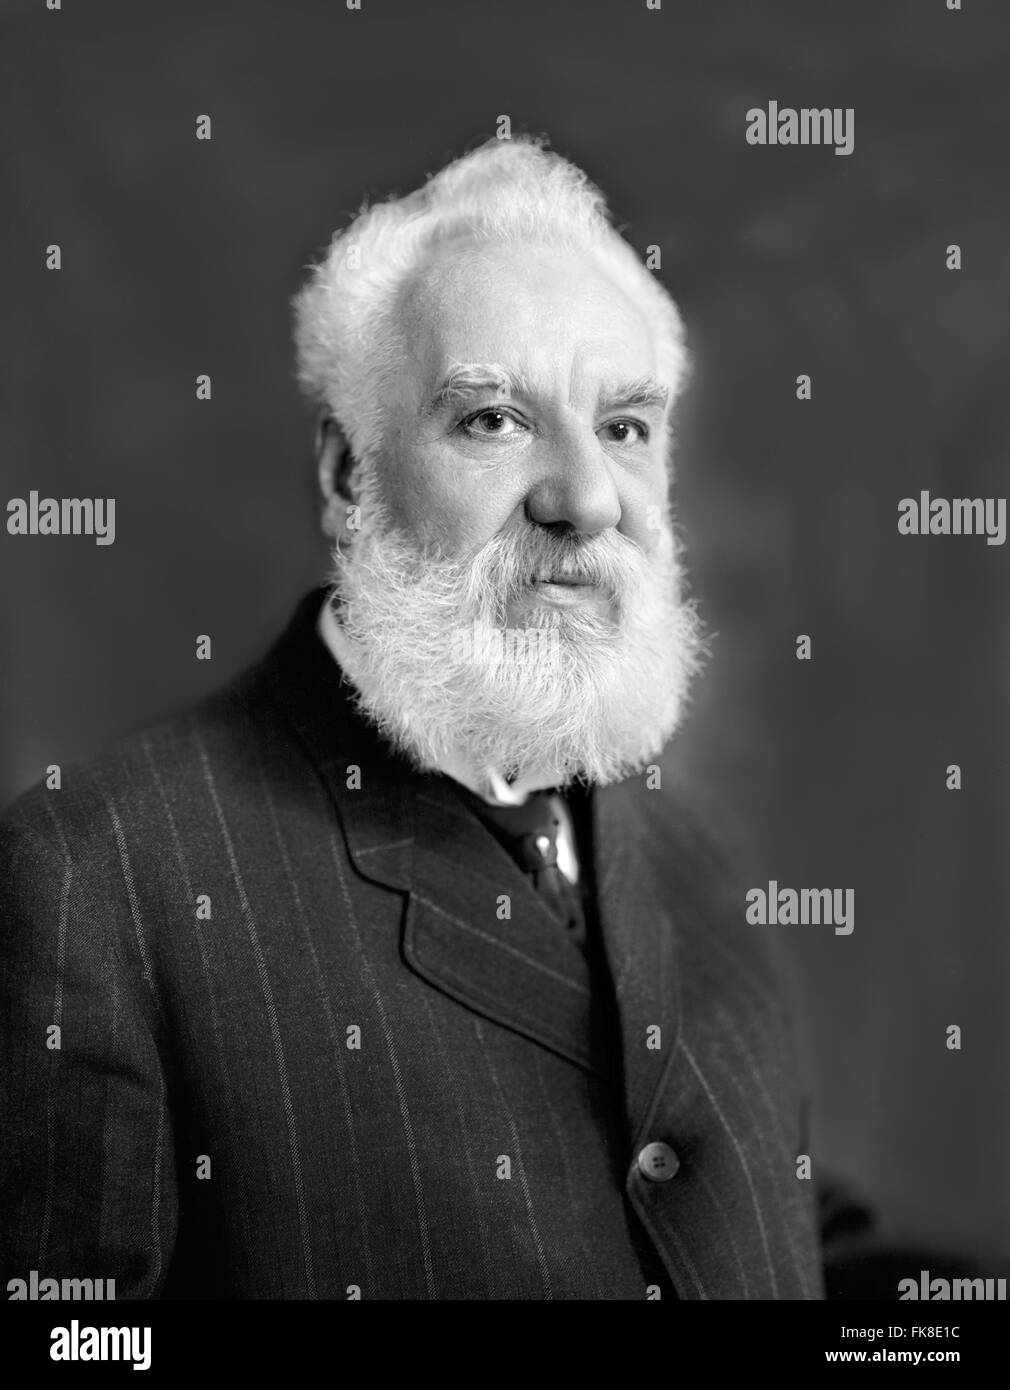 Alexander Graham Bell (1847-1922), portrait Stock Photo